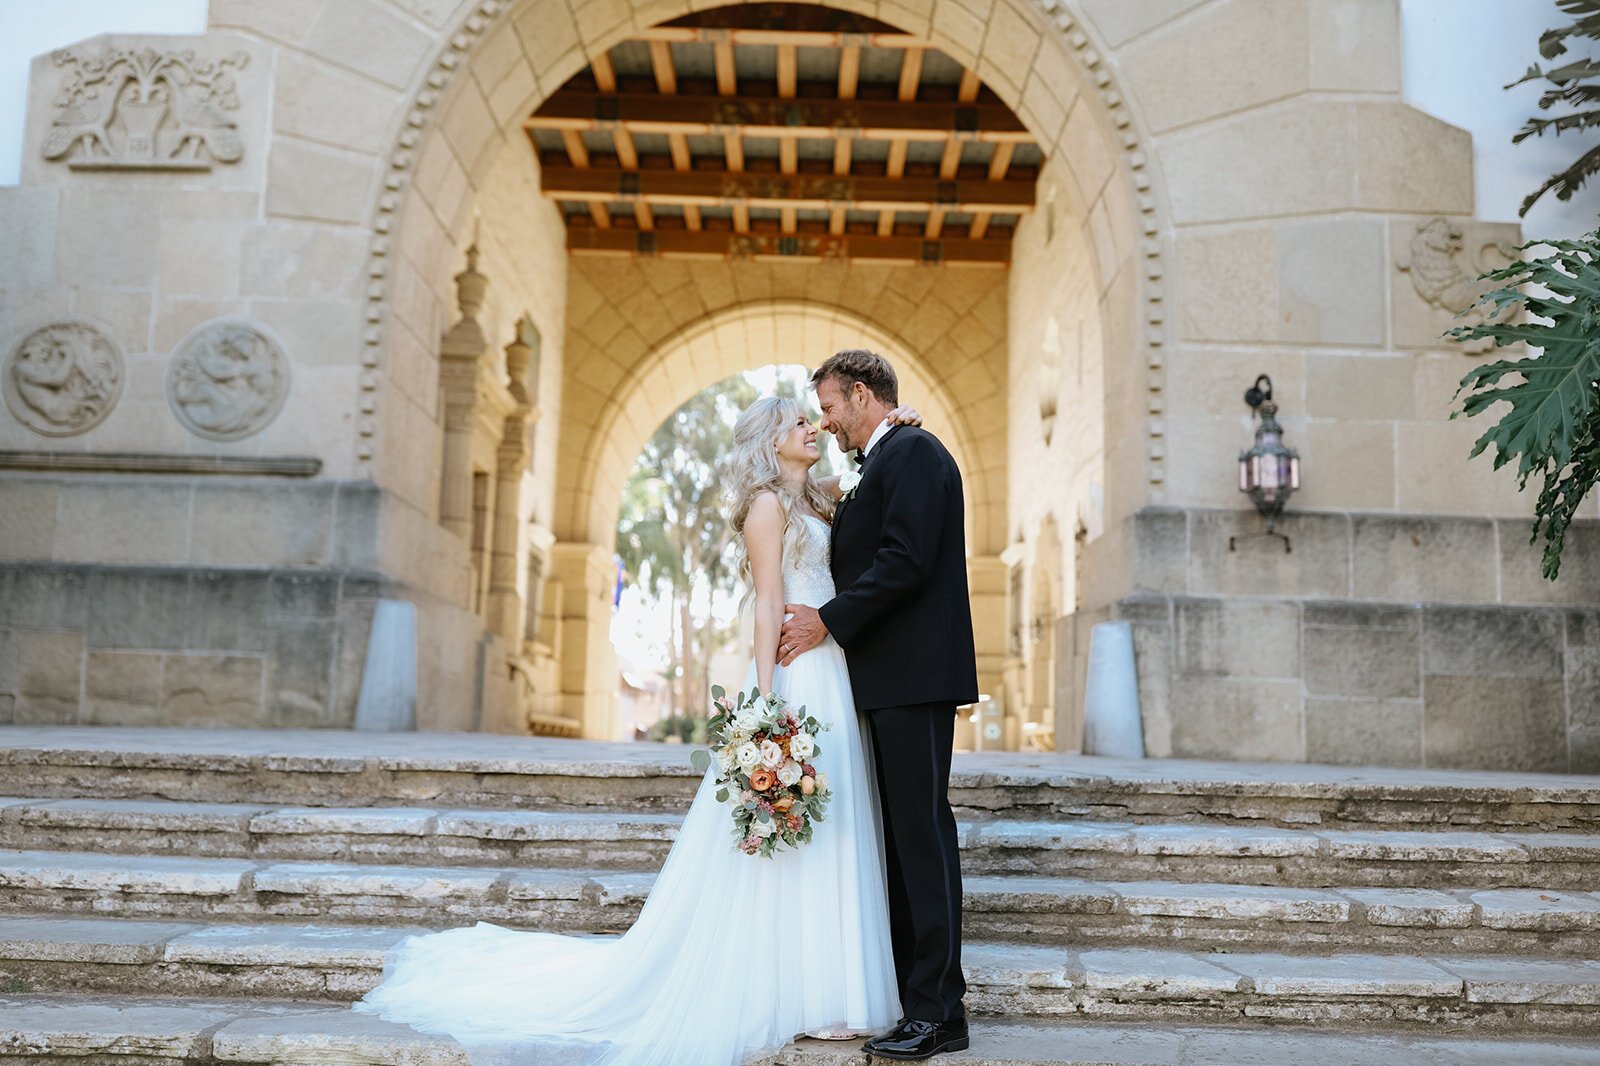 www.santabarbarawedding.com | Santa Barbara Courthouse | Blink Aesthetics | Santa Barbara Classic Weddings | The Dress Bride | Alexis Ireland Florals | Couple on the Courthouse Stairs